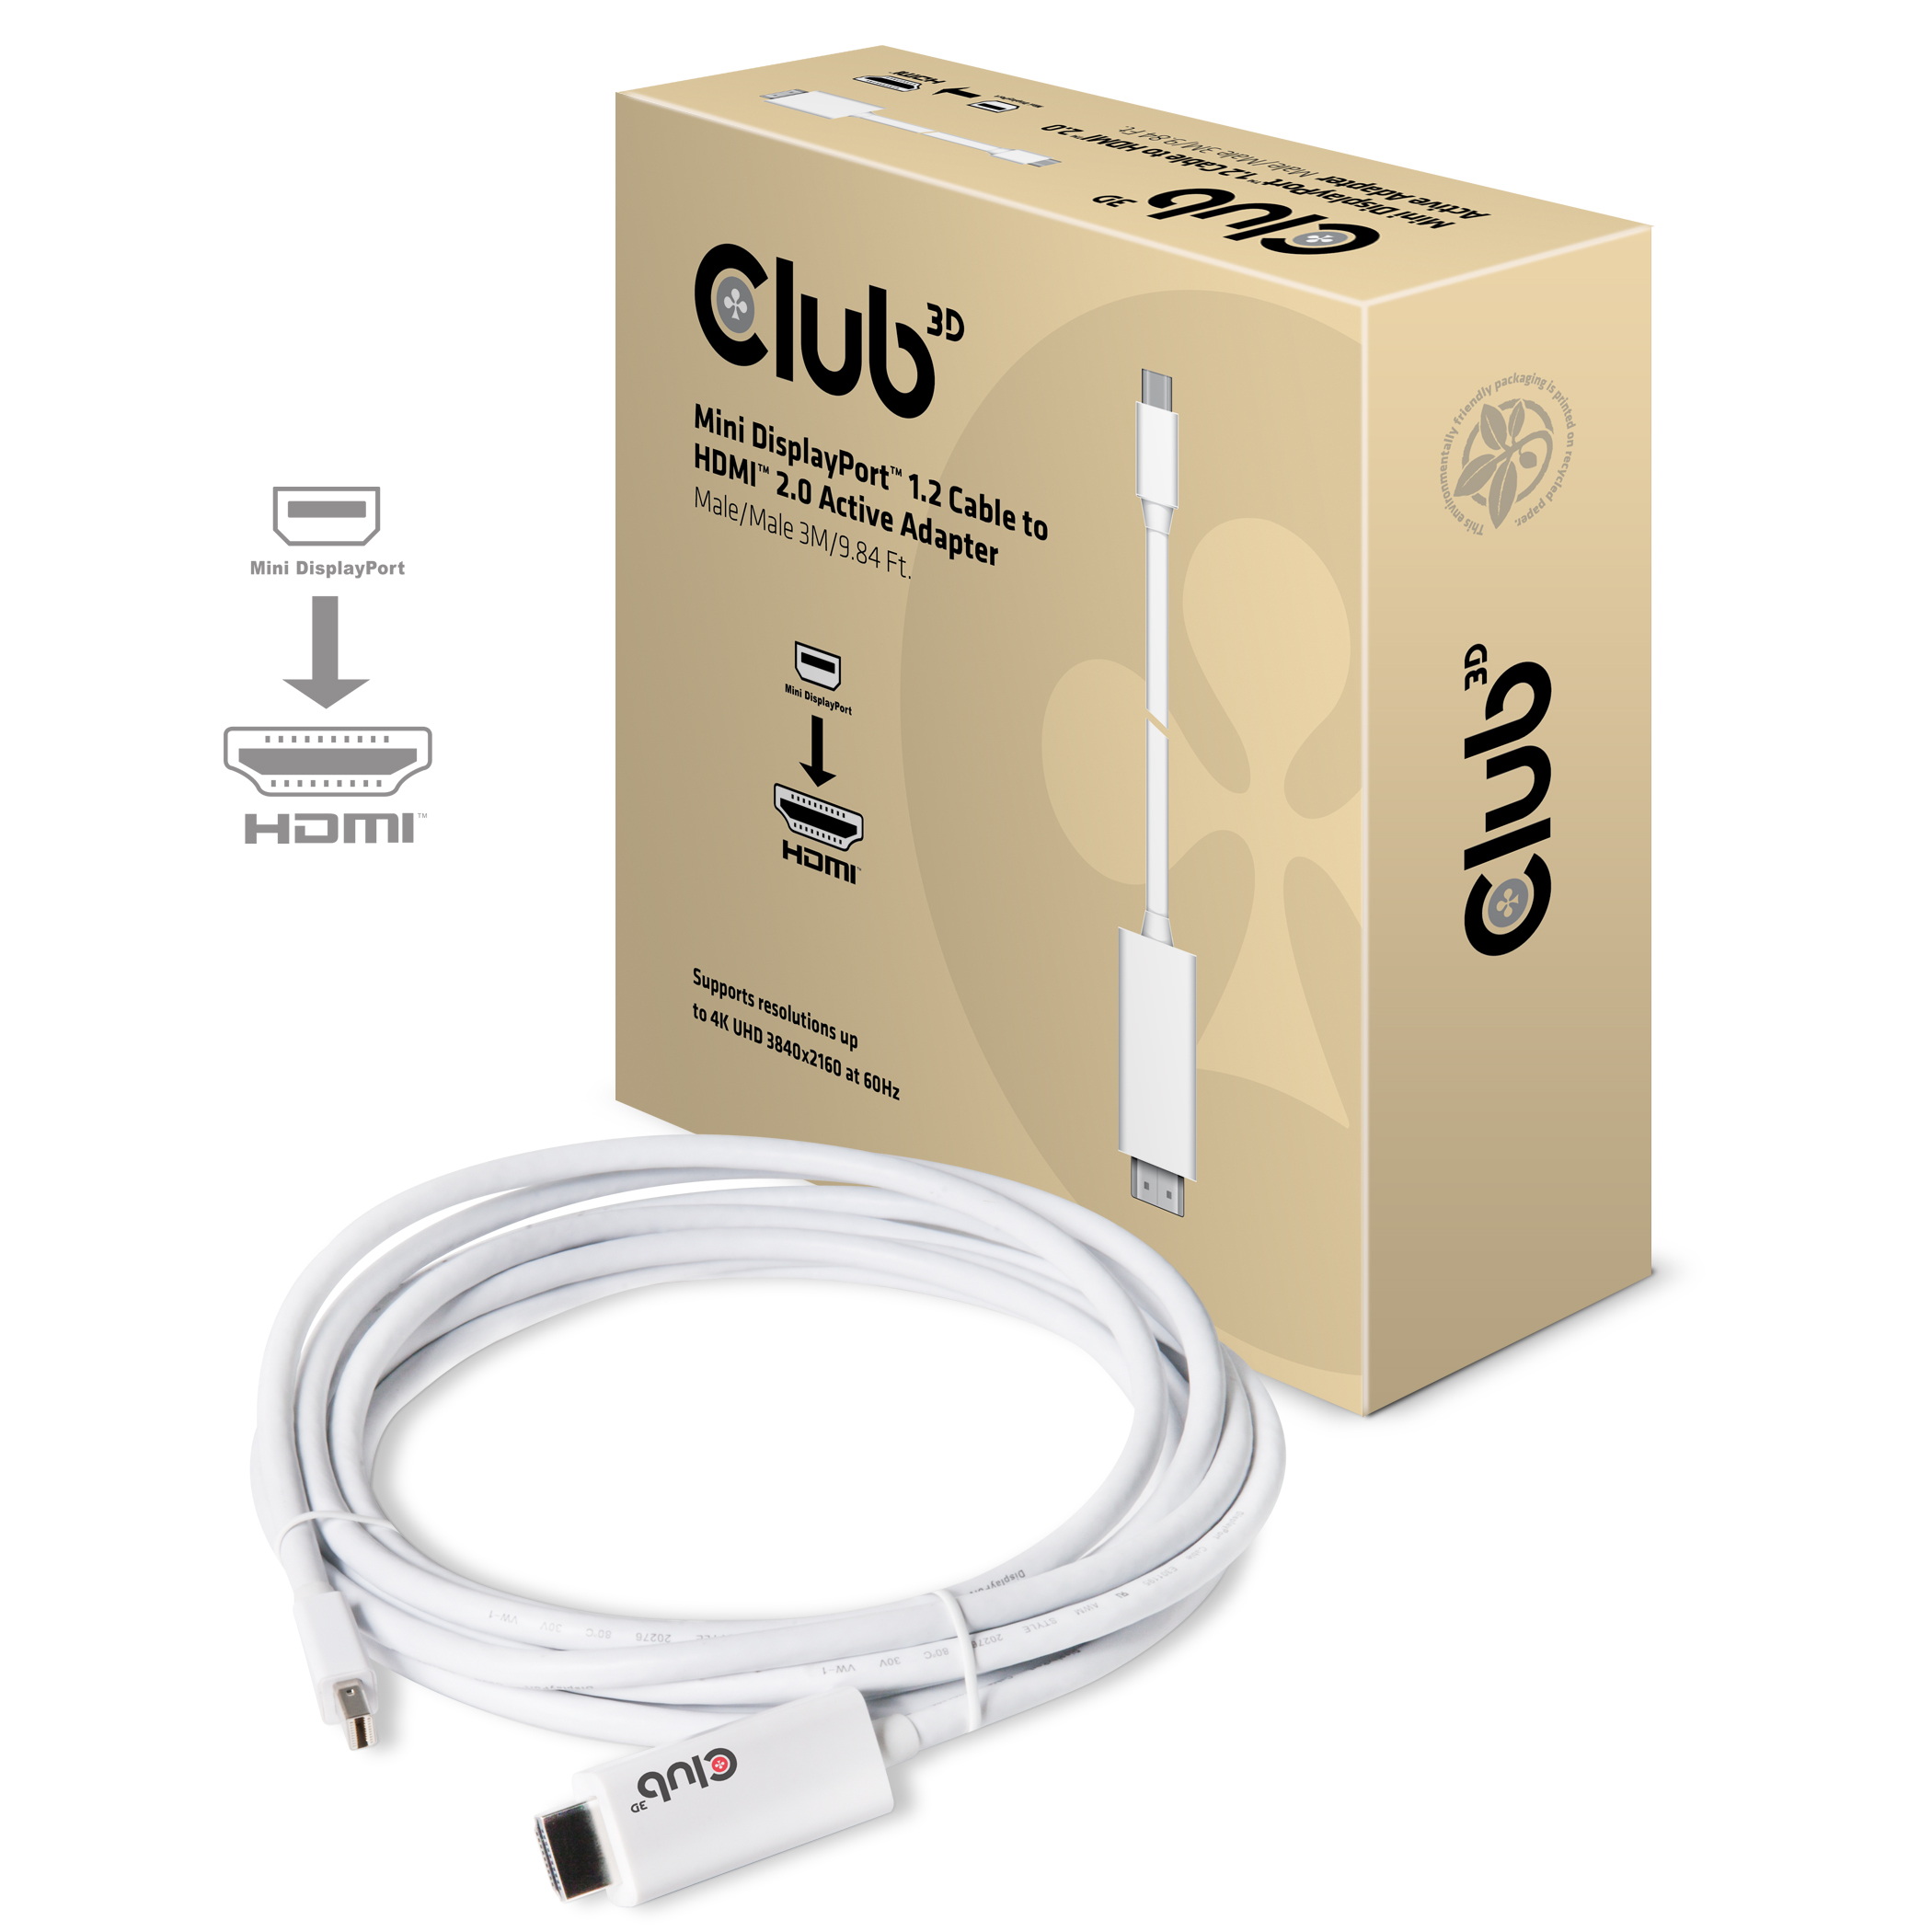 Club 3D MiniDisplayPort Kabel auf HDMI Adapter - 3 m